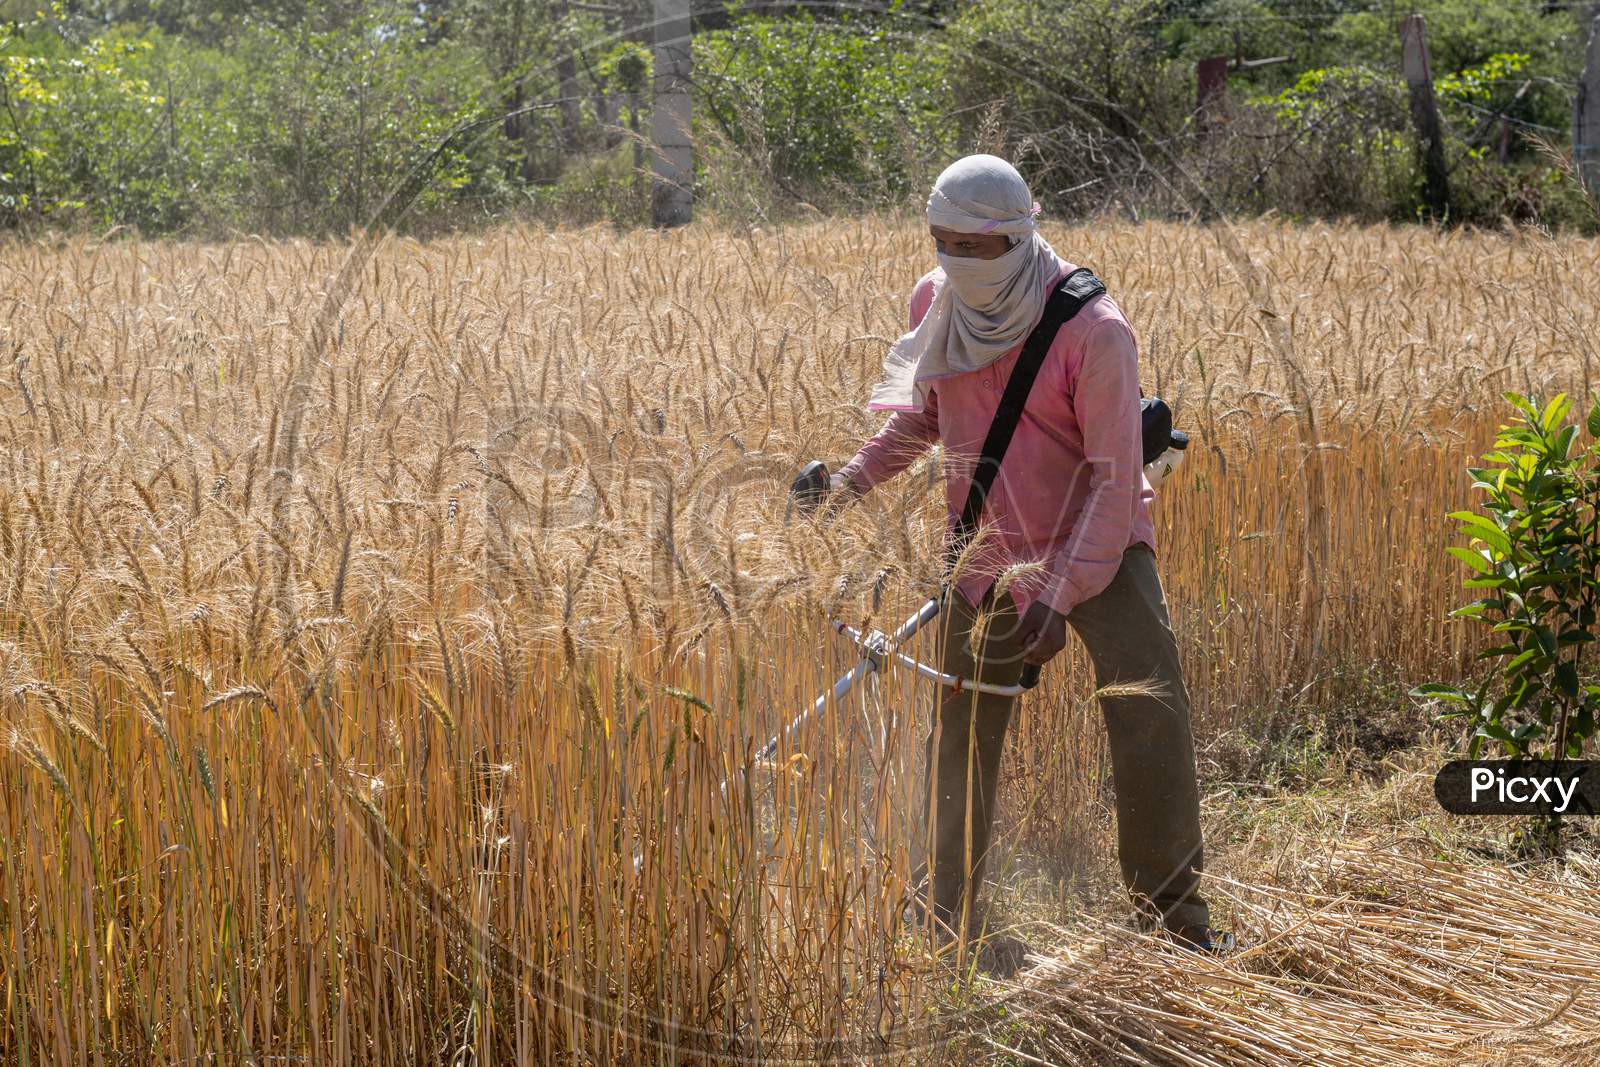 Harvesting of wheat crop using a harvesting machine